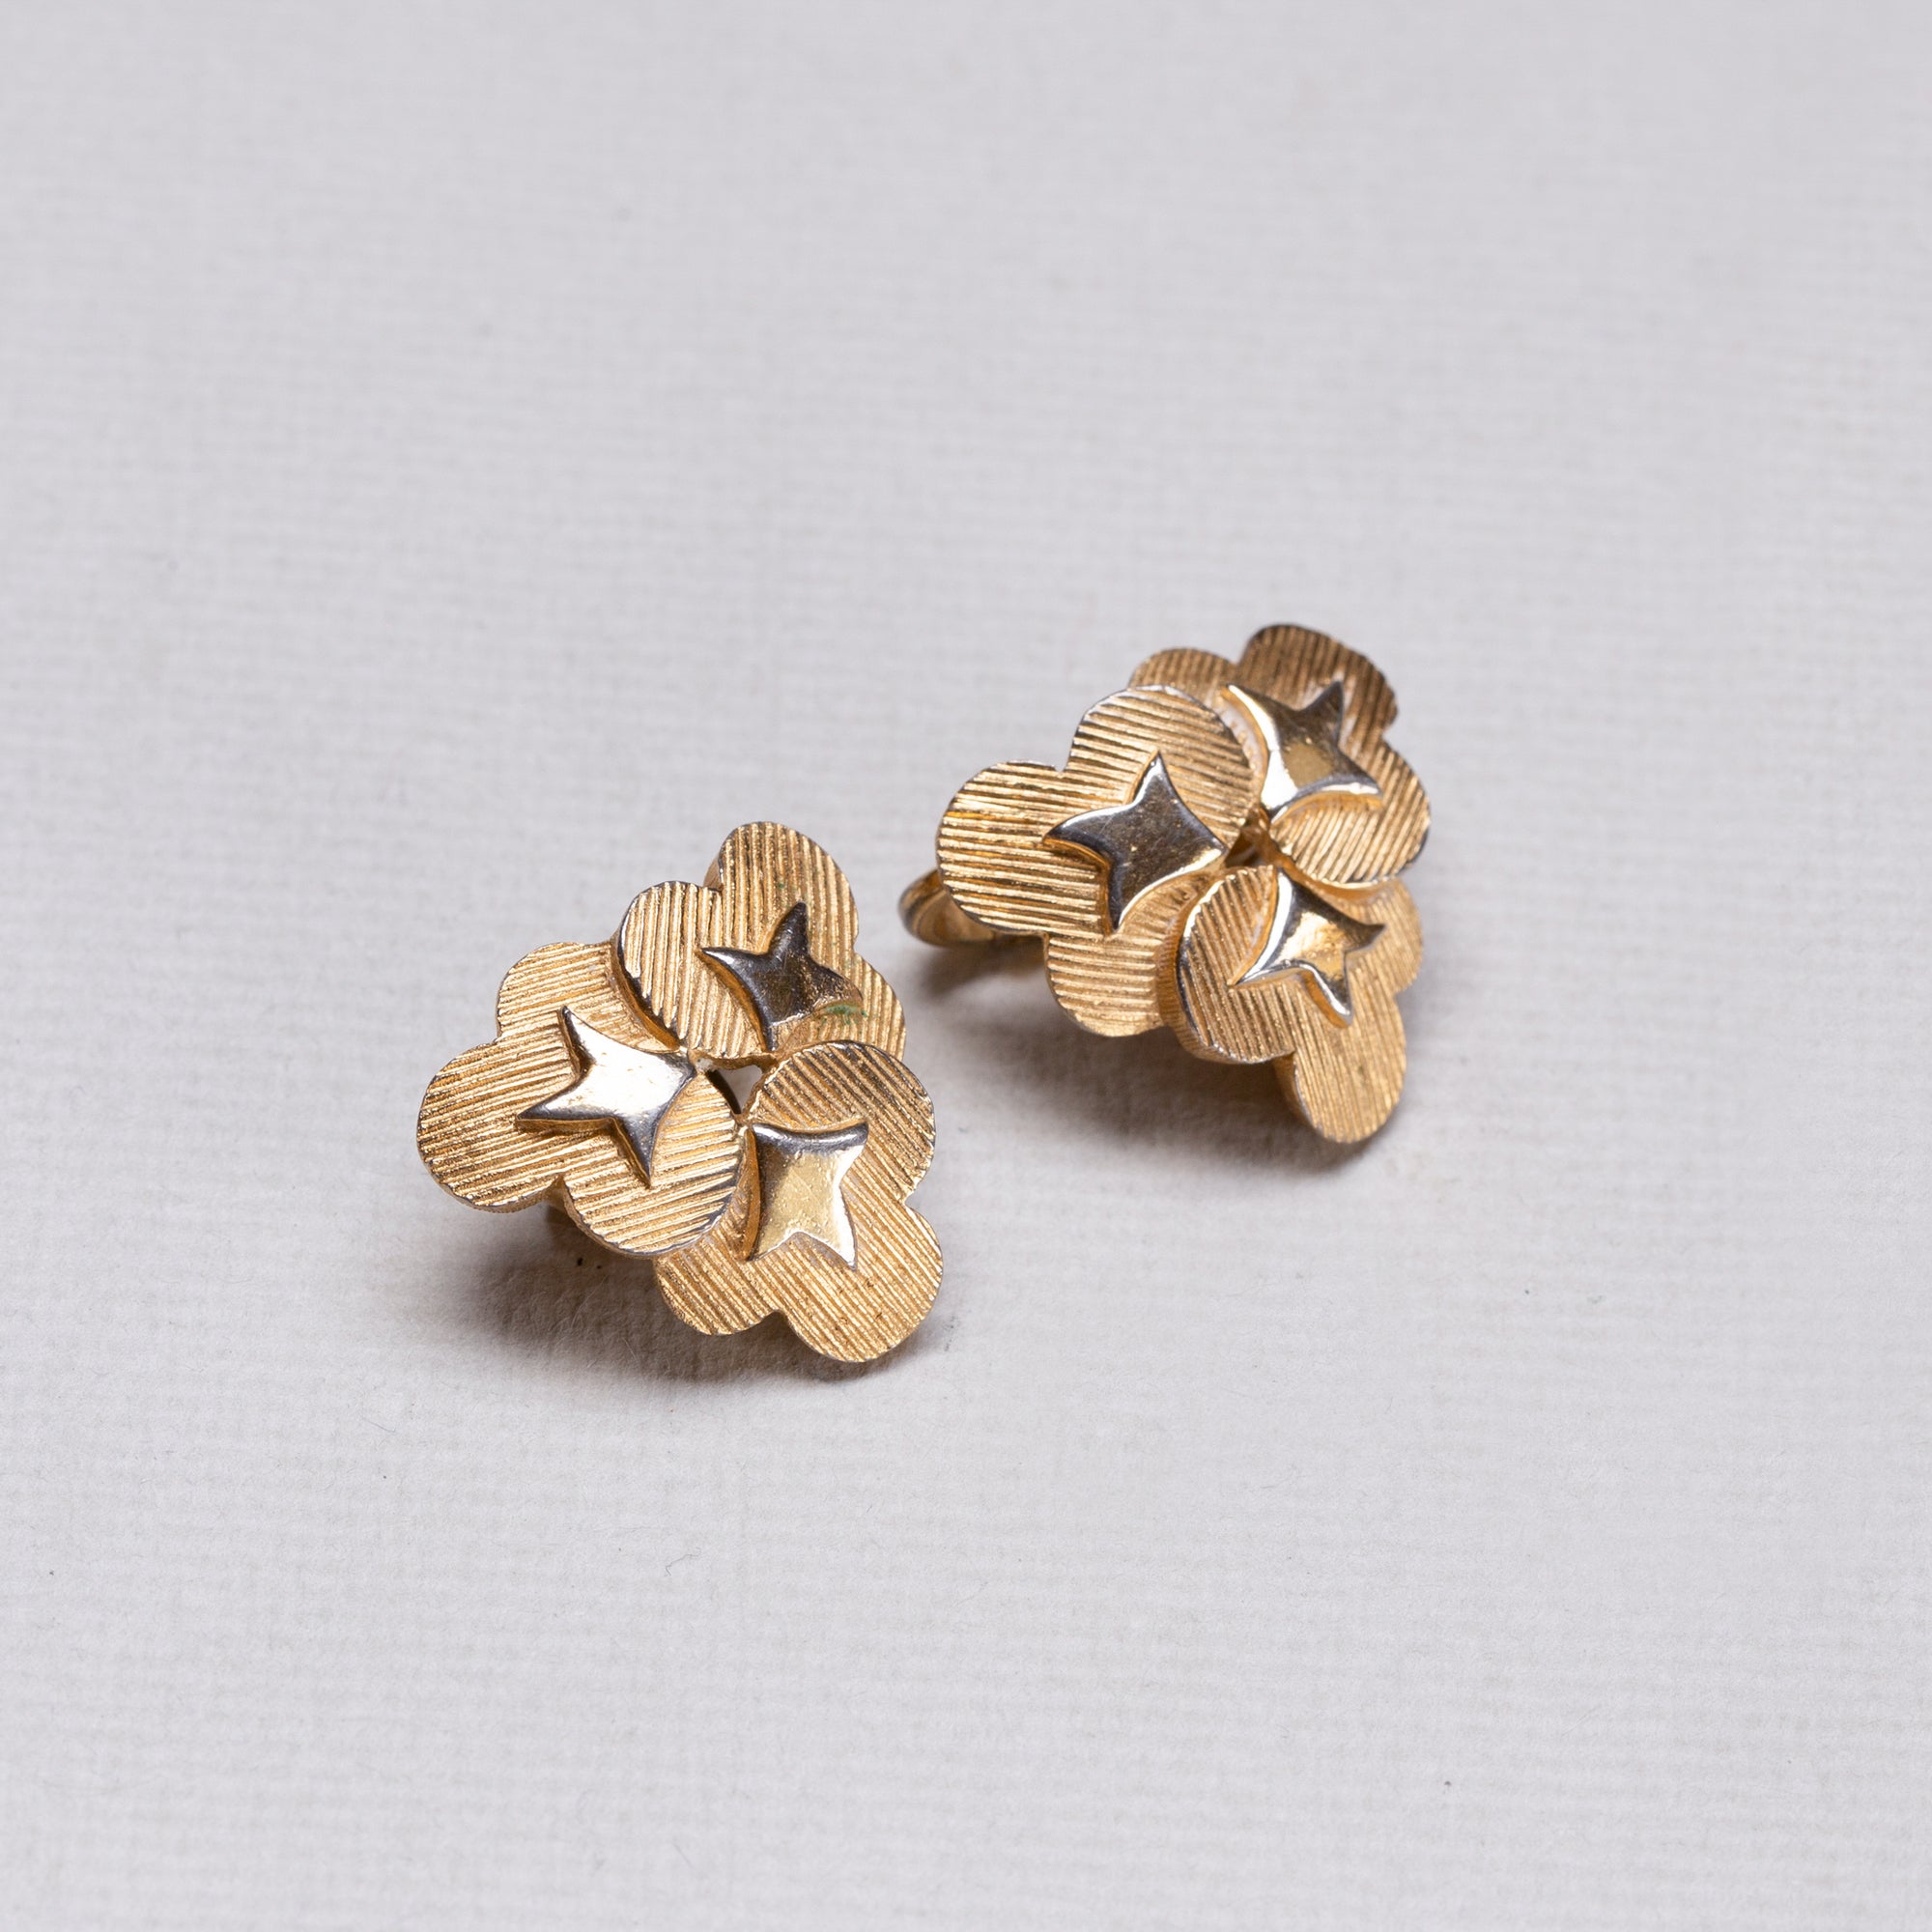 Vintage Trifari Gold Flower Clip-on Earrings